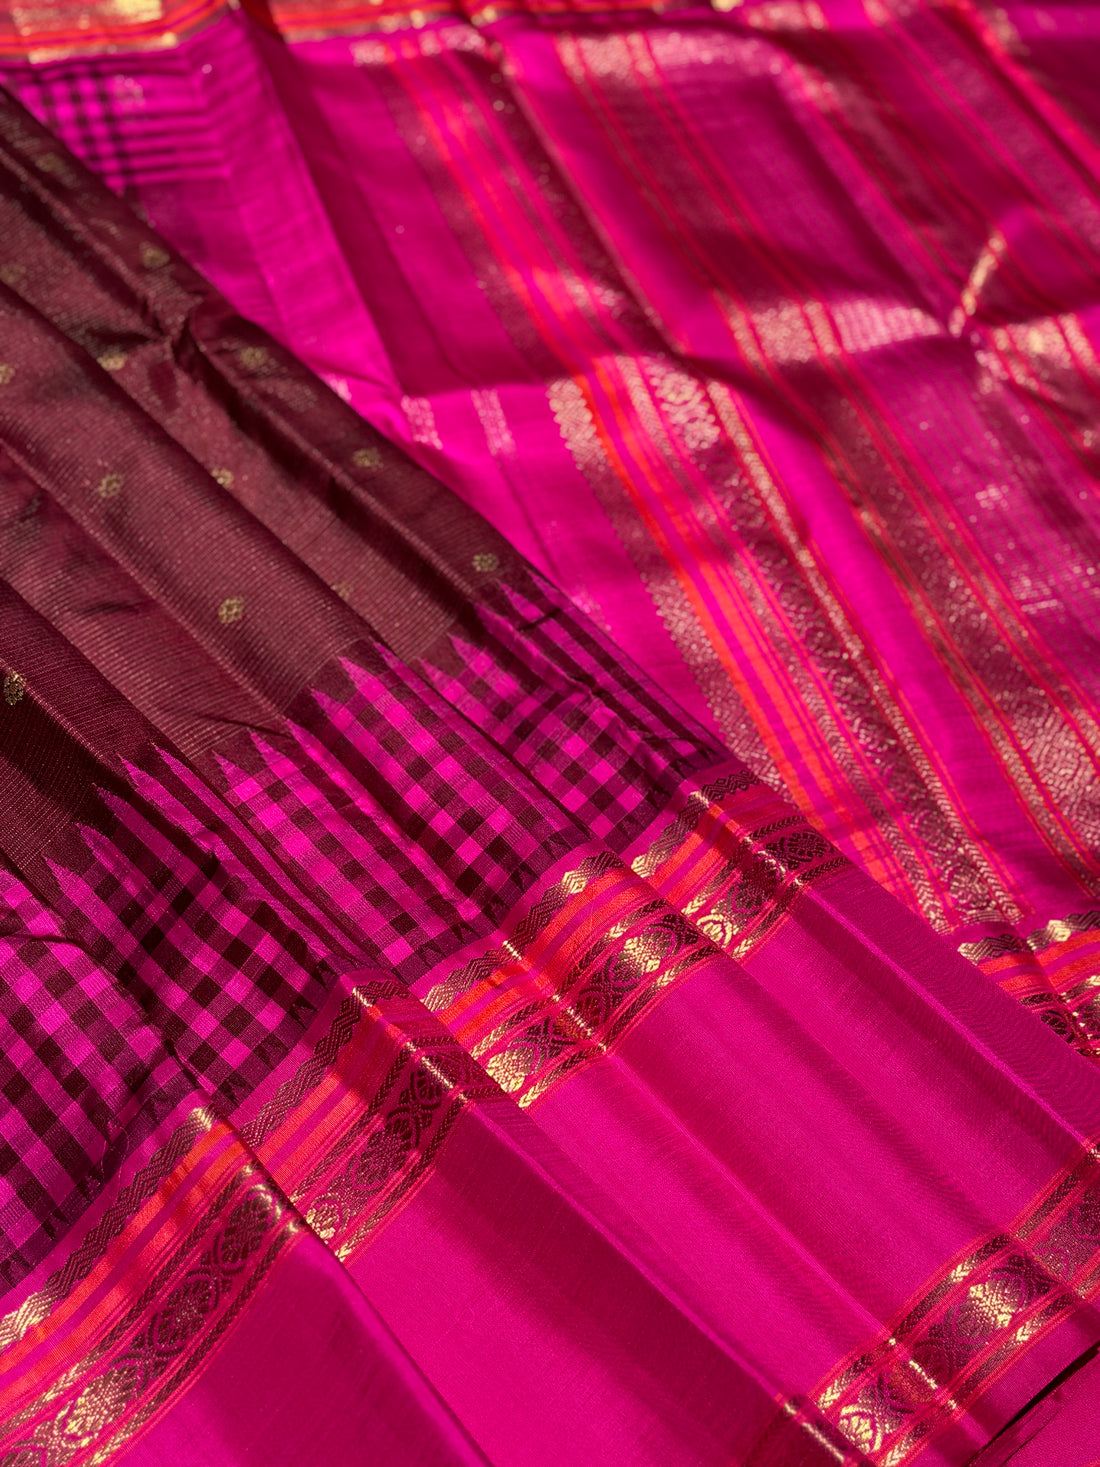 PARAMPARA Kanchivaram silk saree in V-paakku betelnut  brown with pink shade